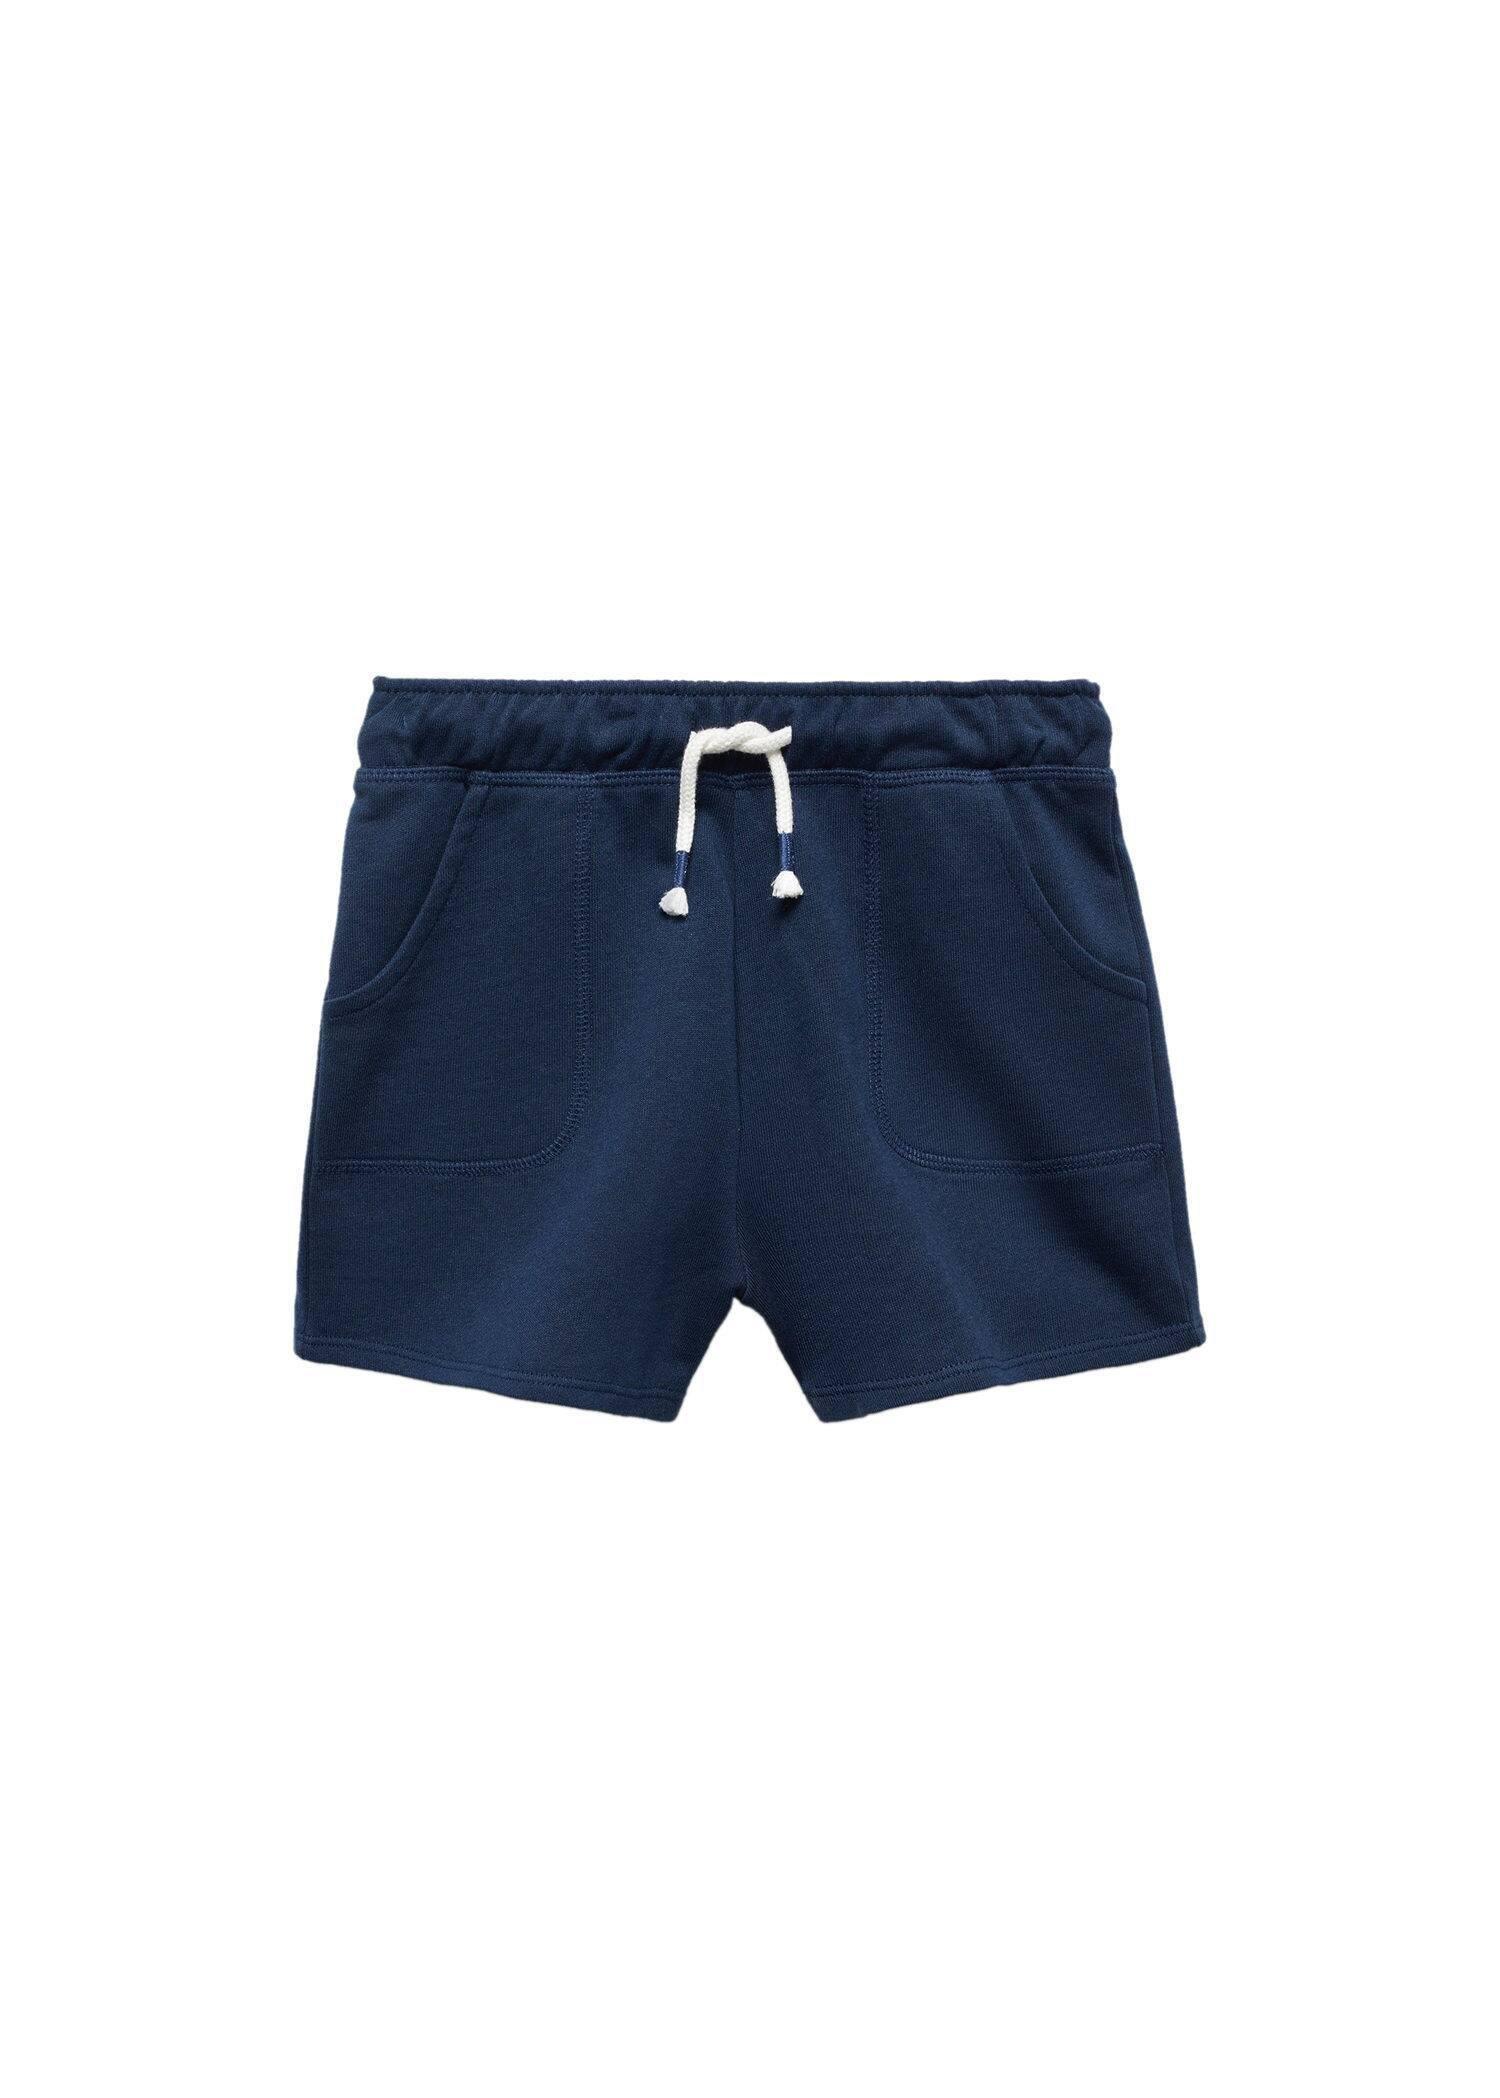 Mango - Navy Cotton Shorts, Kids Girls